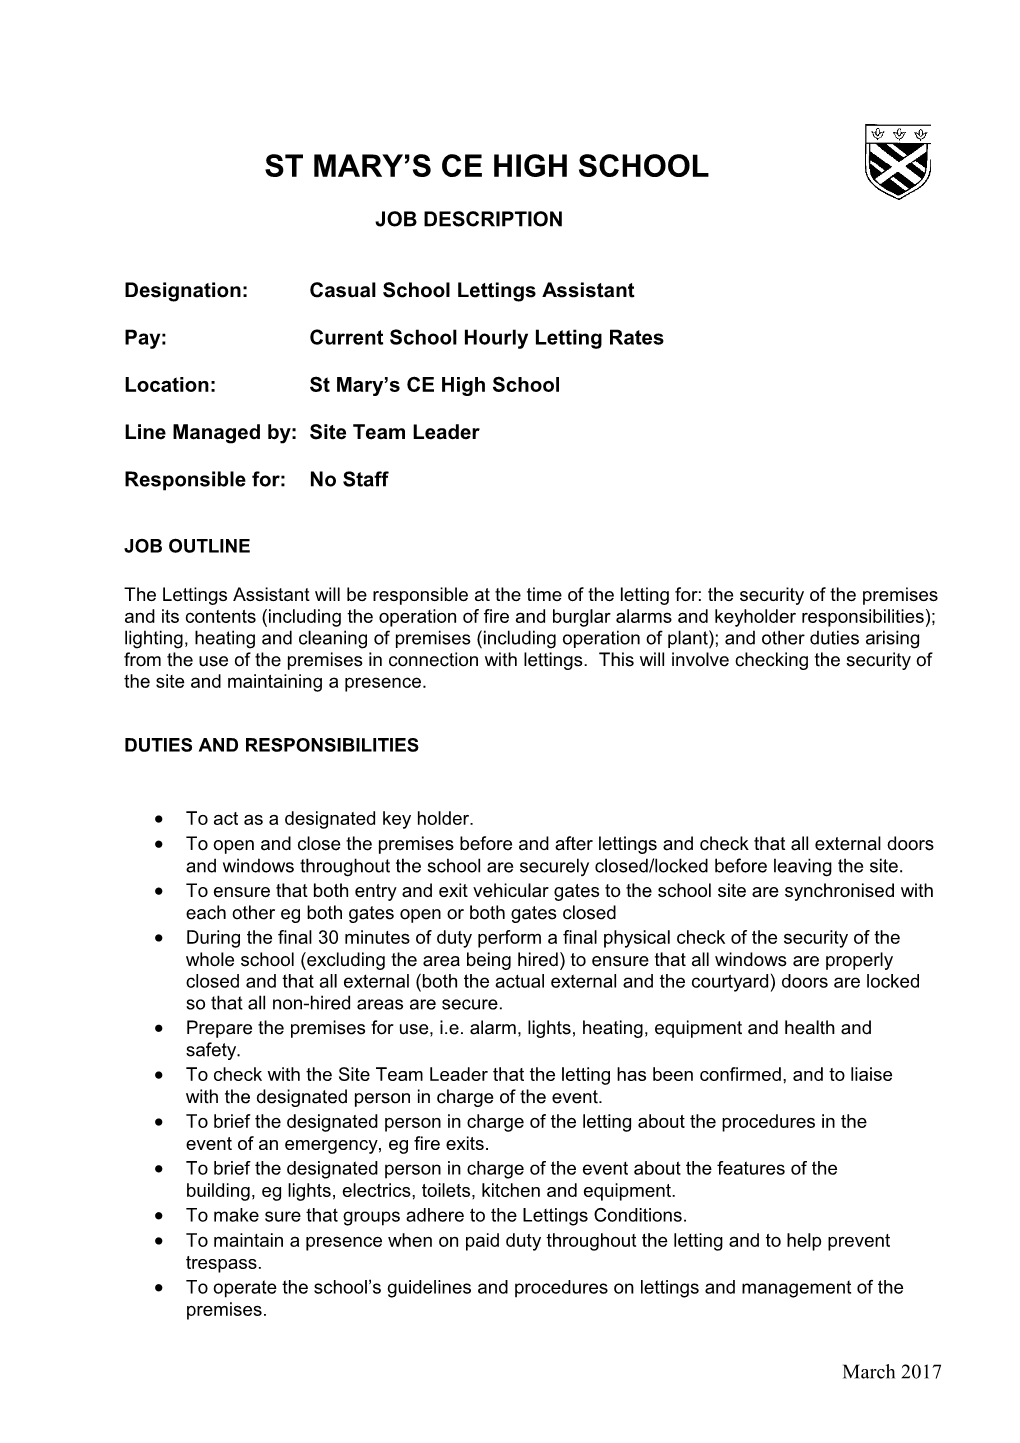 Designation:Casual School Lettings Assistant